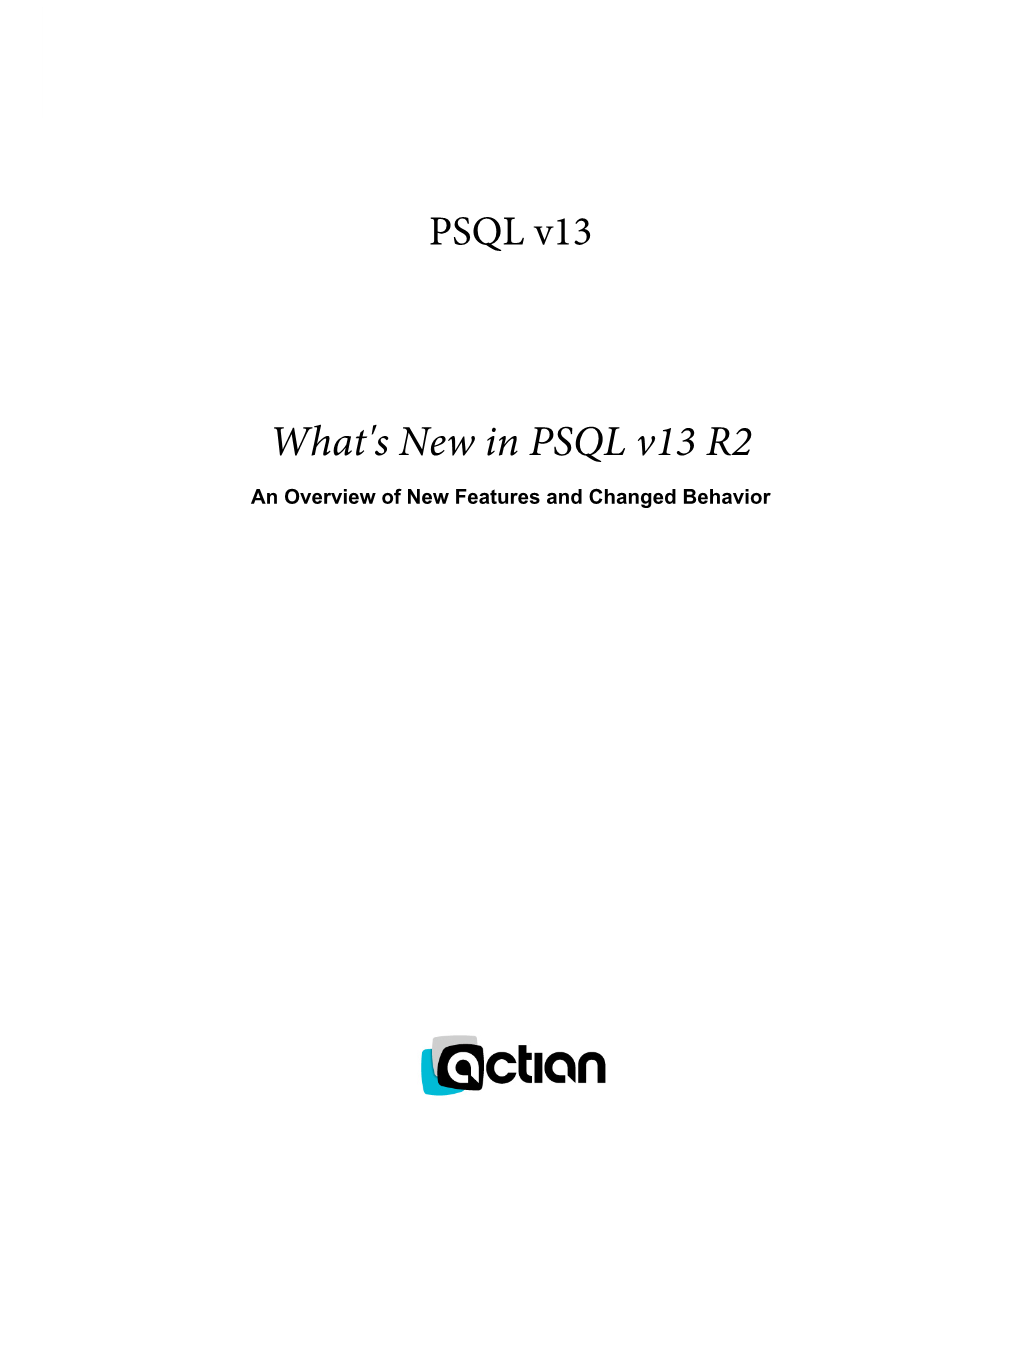 What's New in PSQL V13 R2